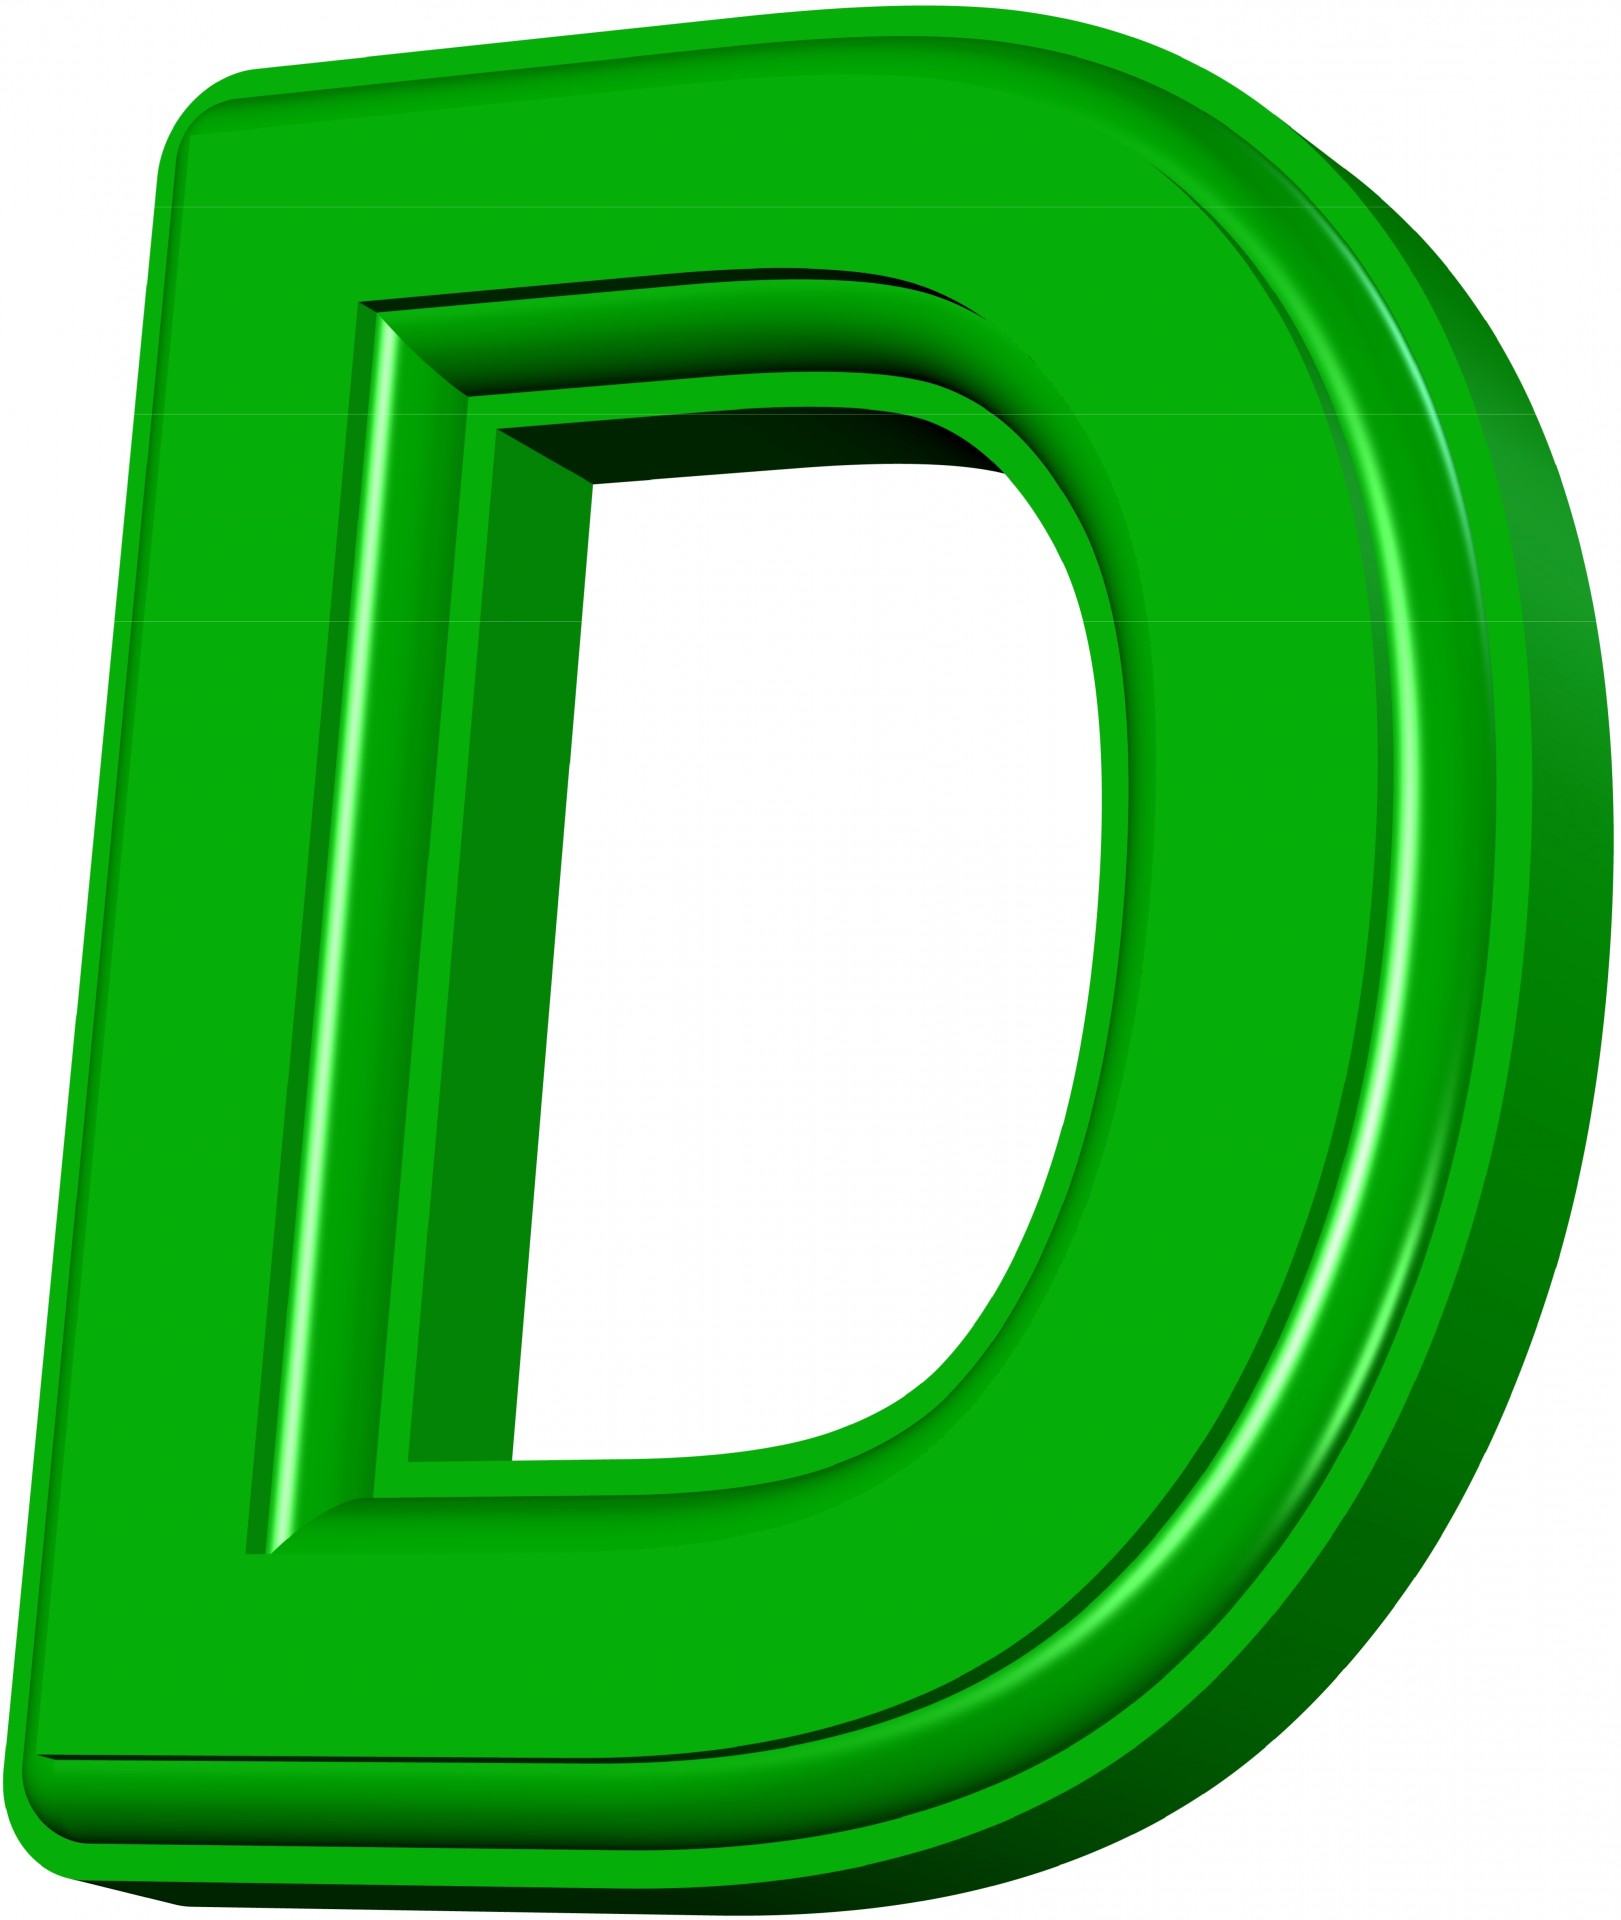 green letter d alphabet free photo